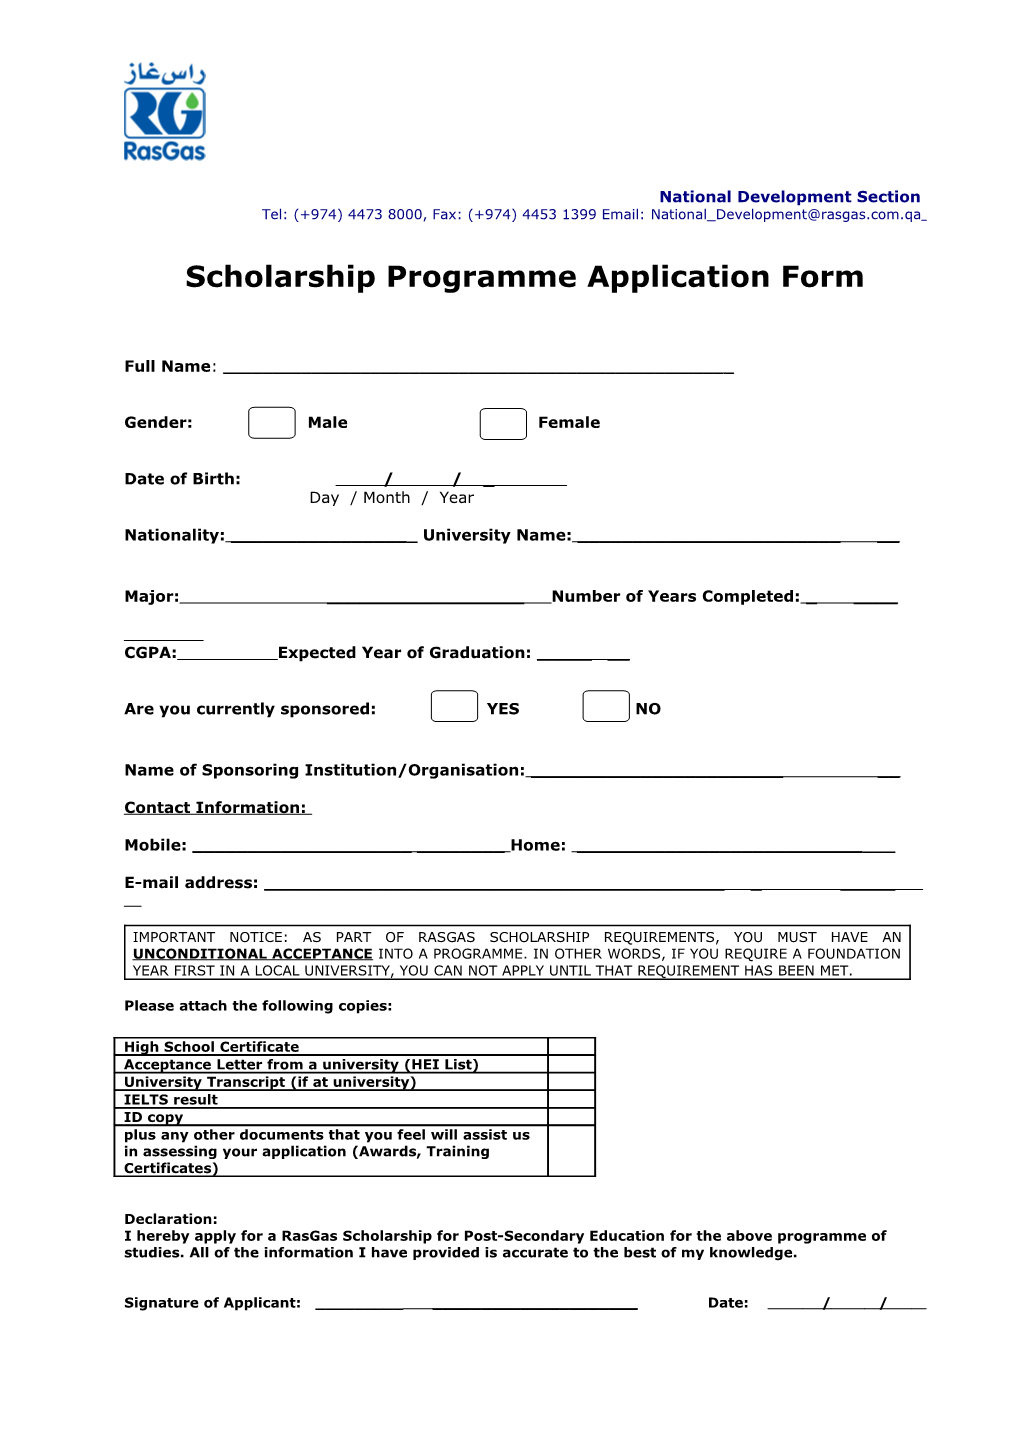 Scholarship Programme Application Form